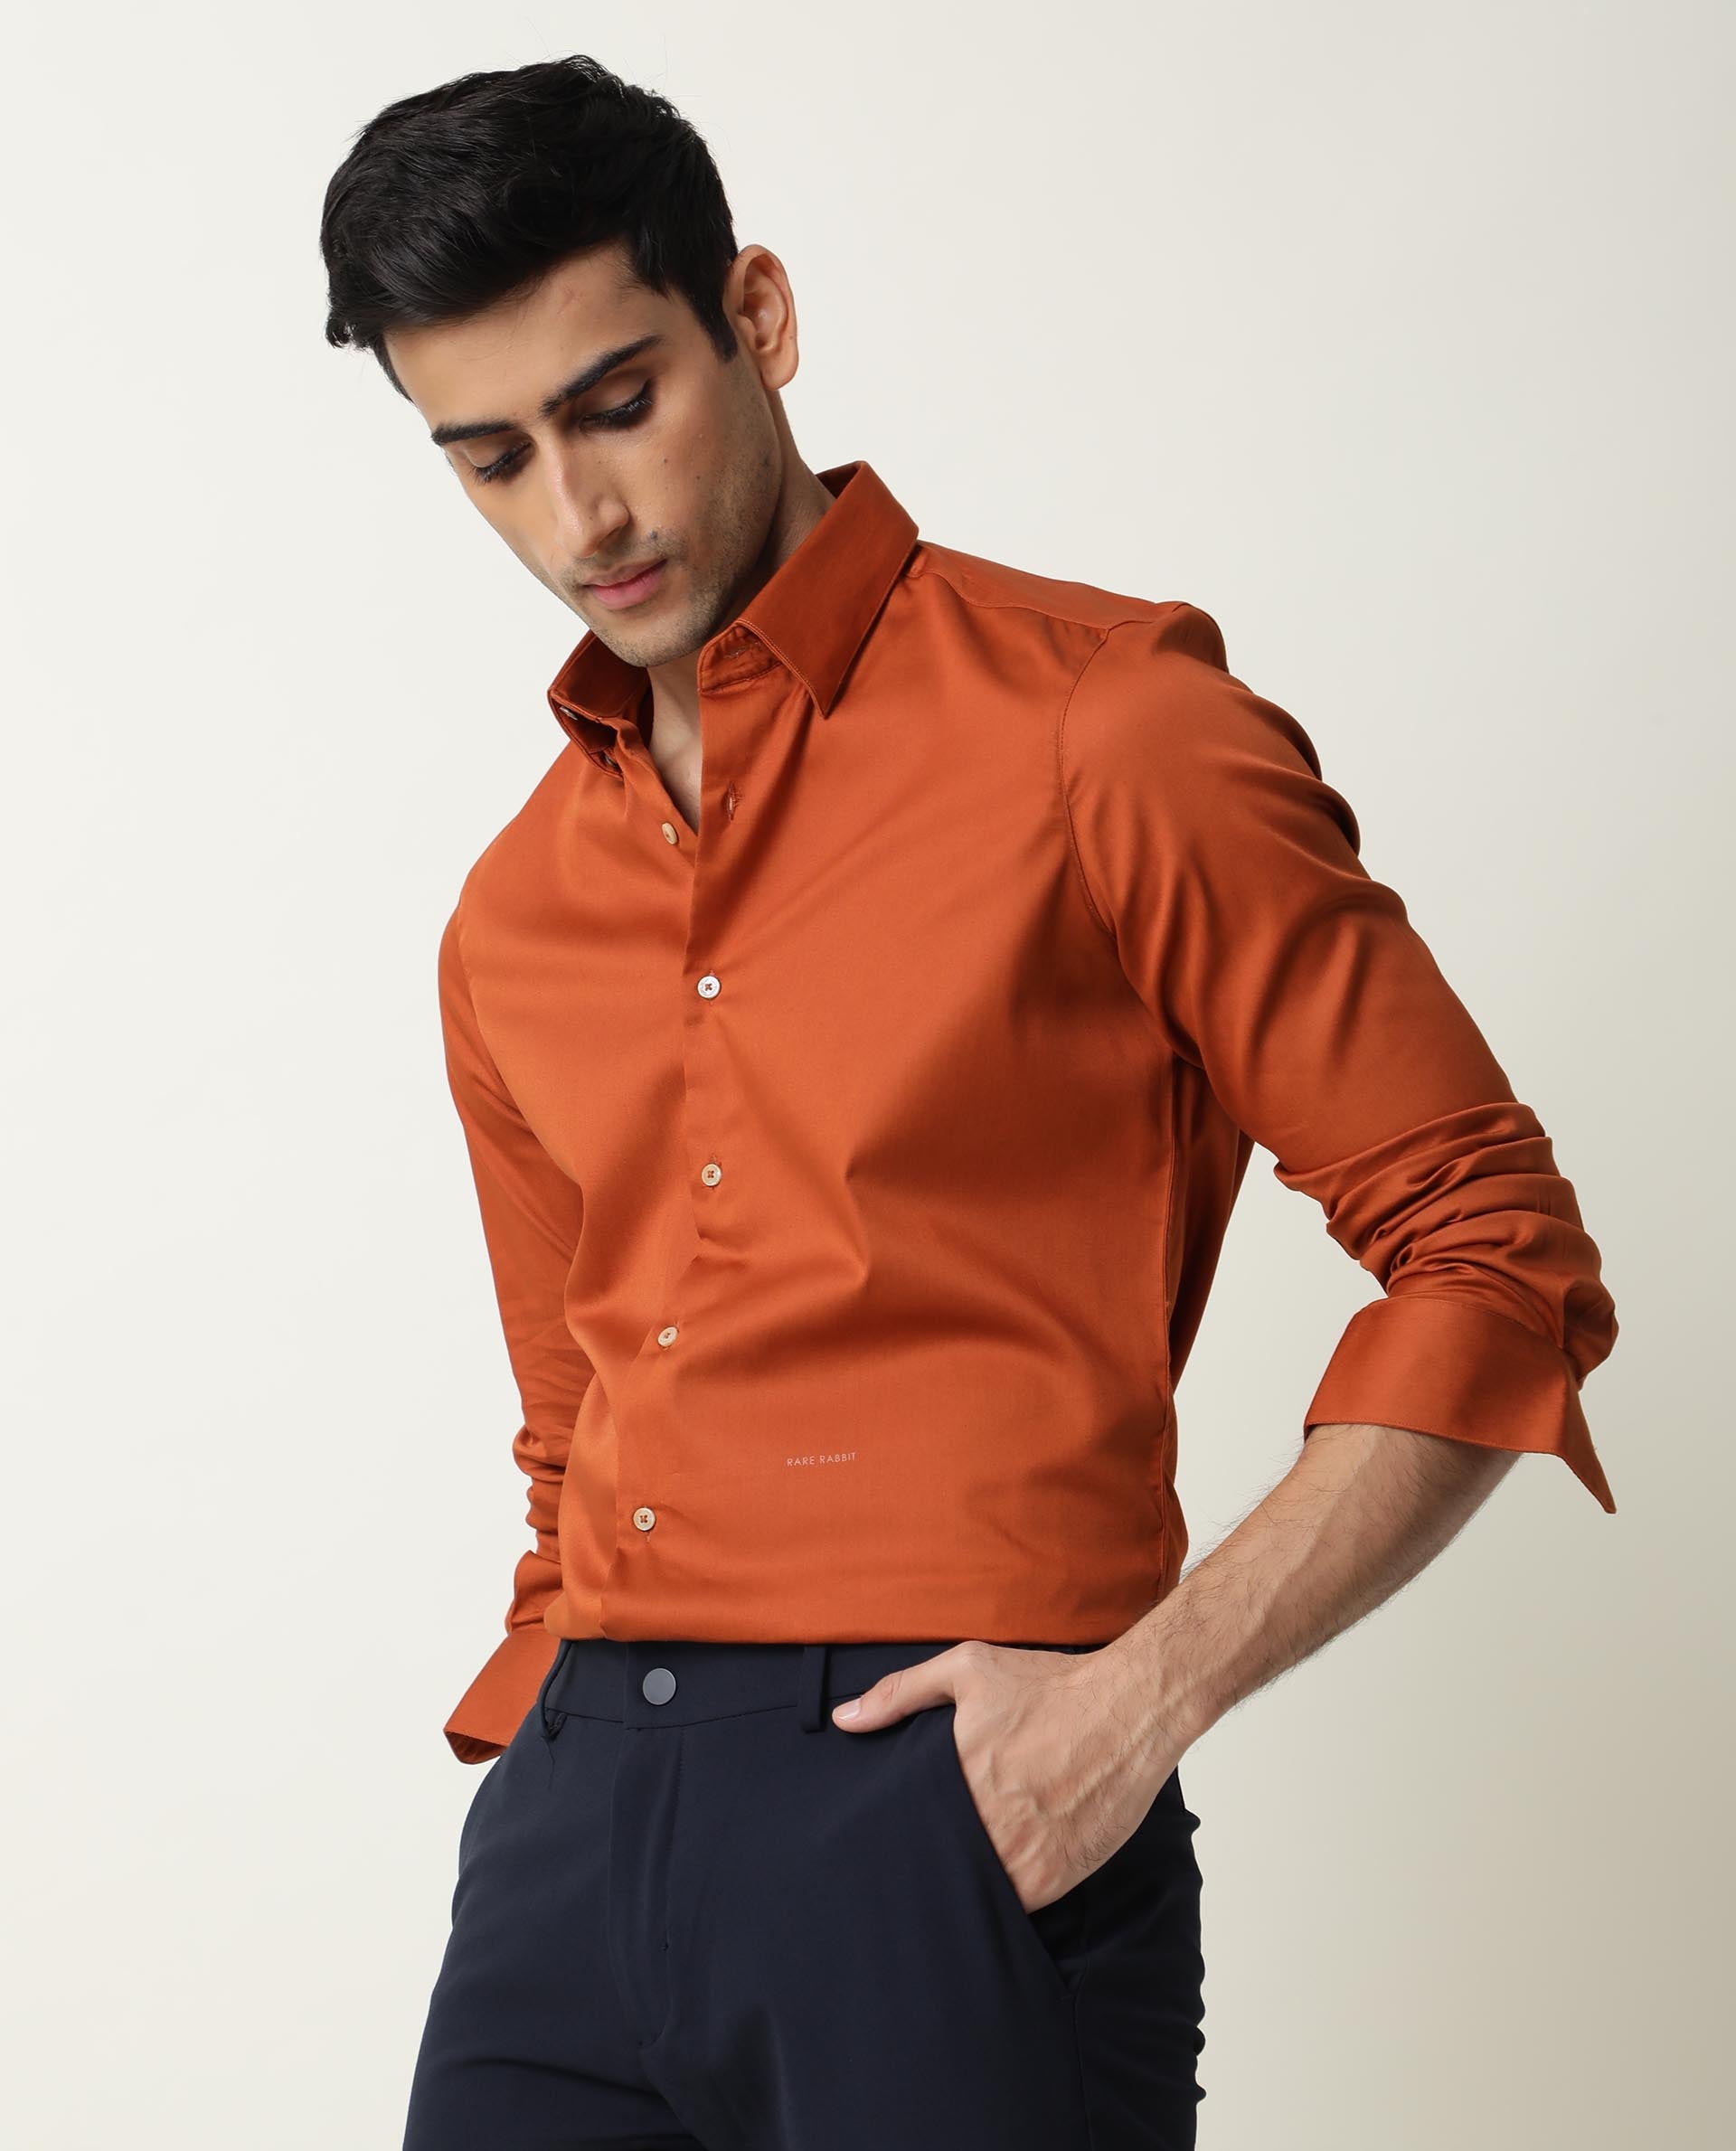 The Orange Shirt | Long Sleeved Dress Shirt | OppoSuits